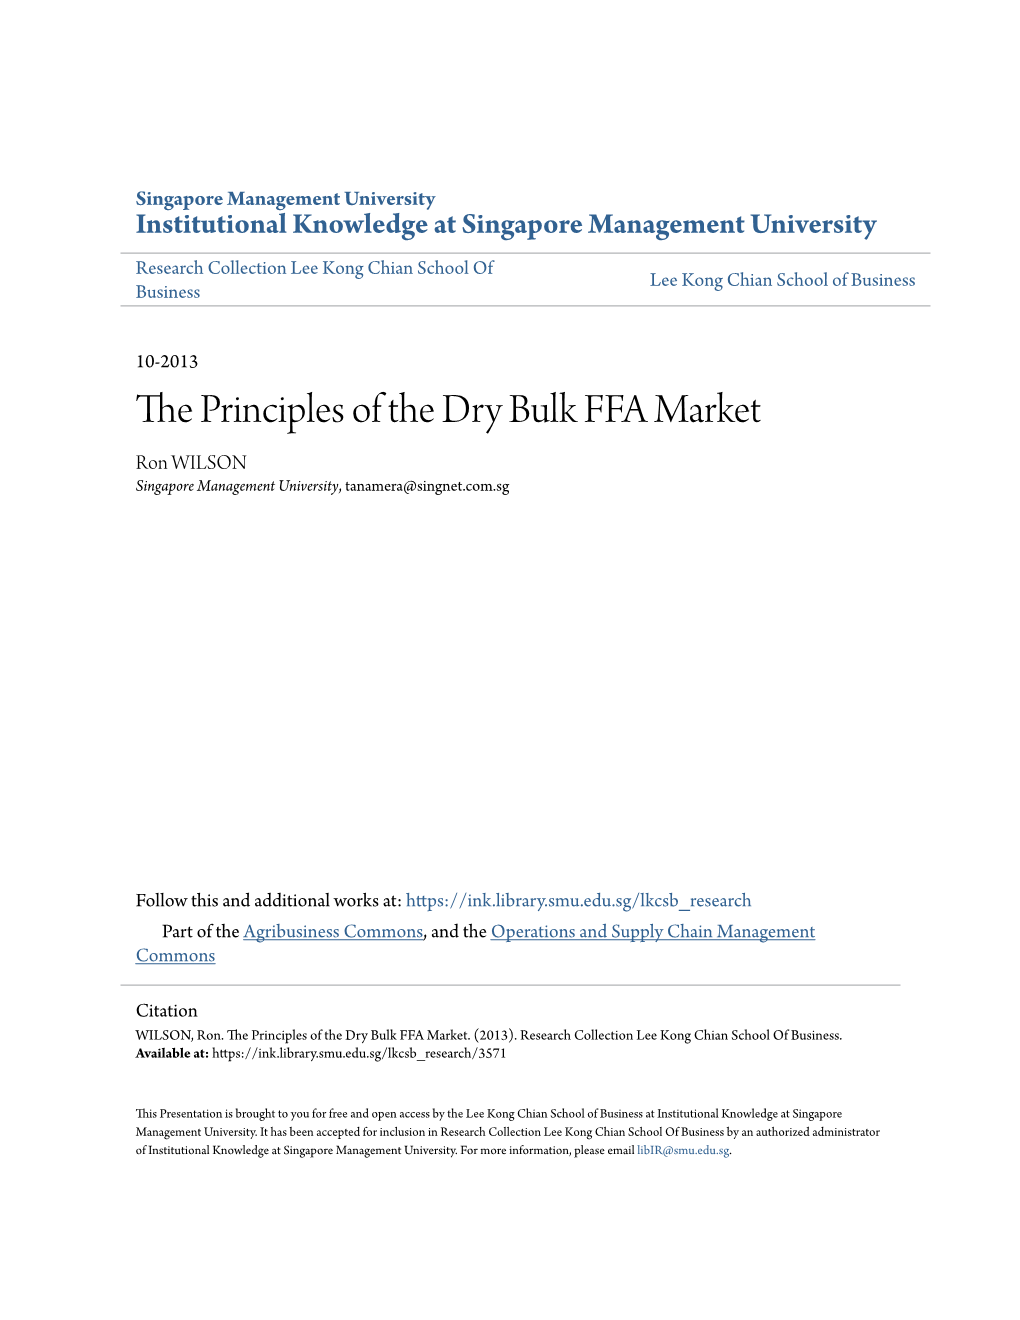 The Principles of the Dry Bulk FFA Market